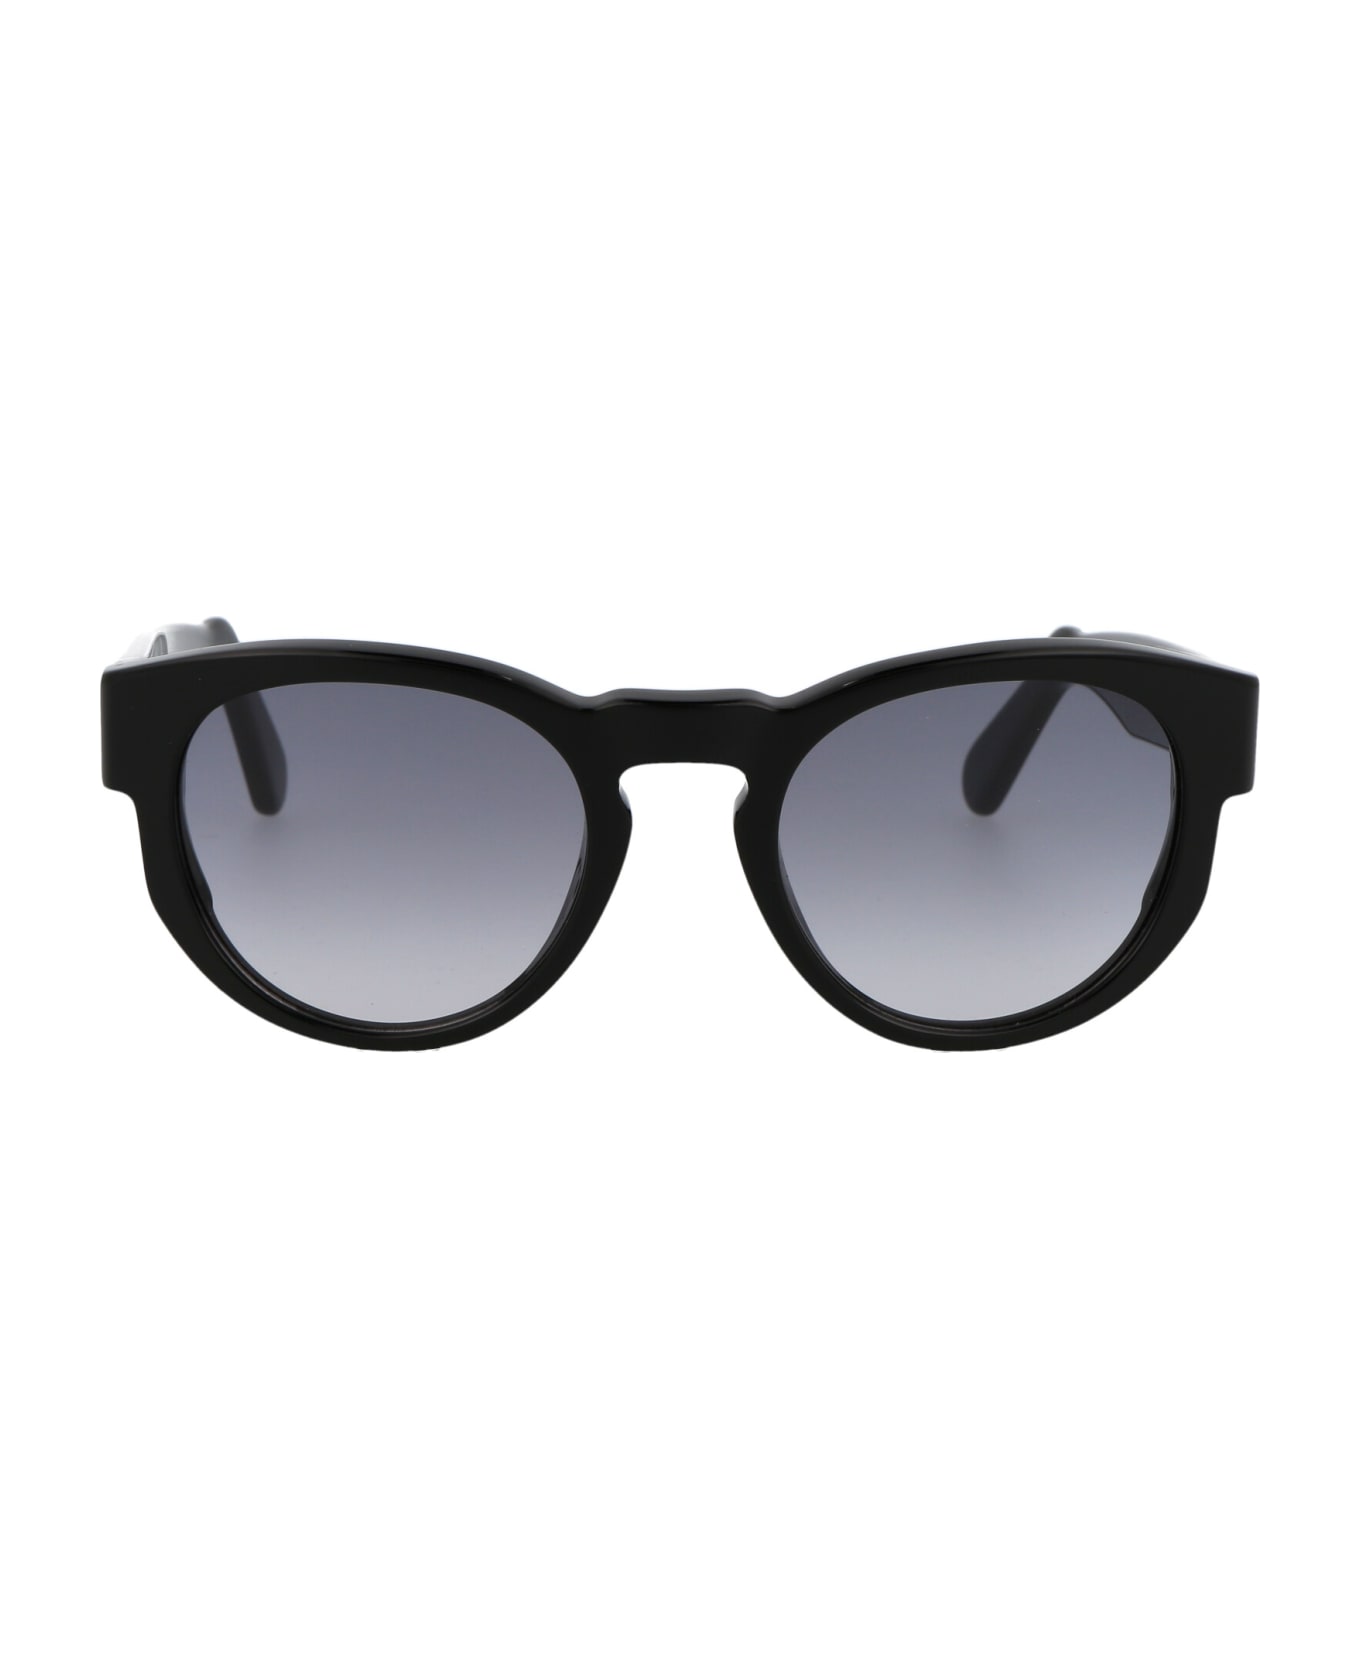 GCDS Gd0011 Sunglasses - 01B Nero Lucido/Fumo Grad サングラス